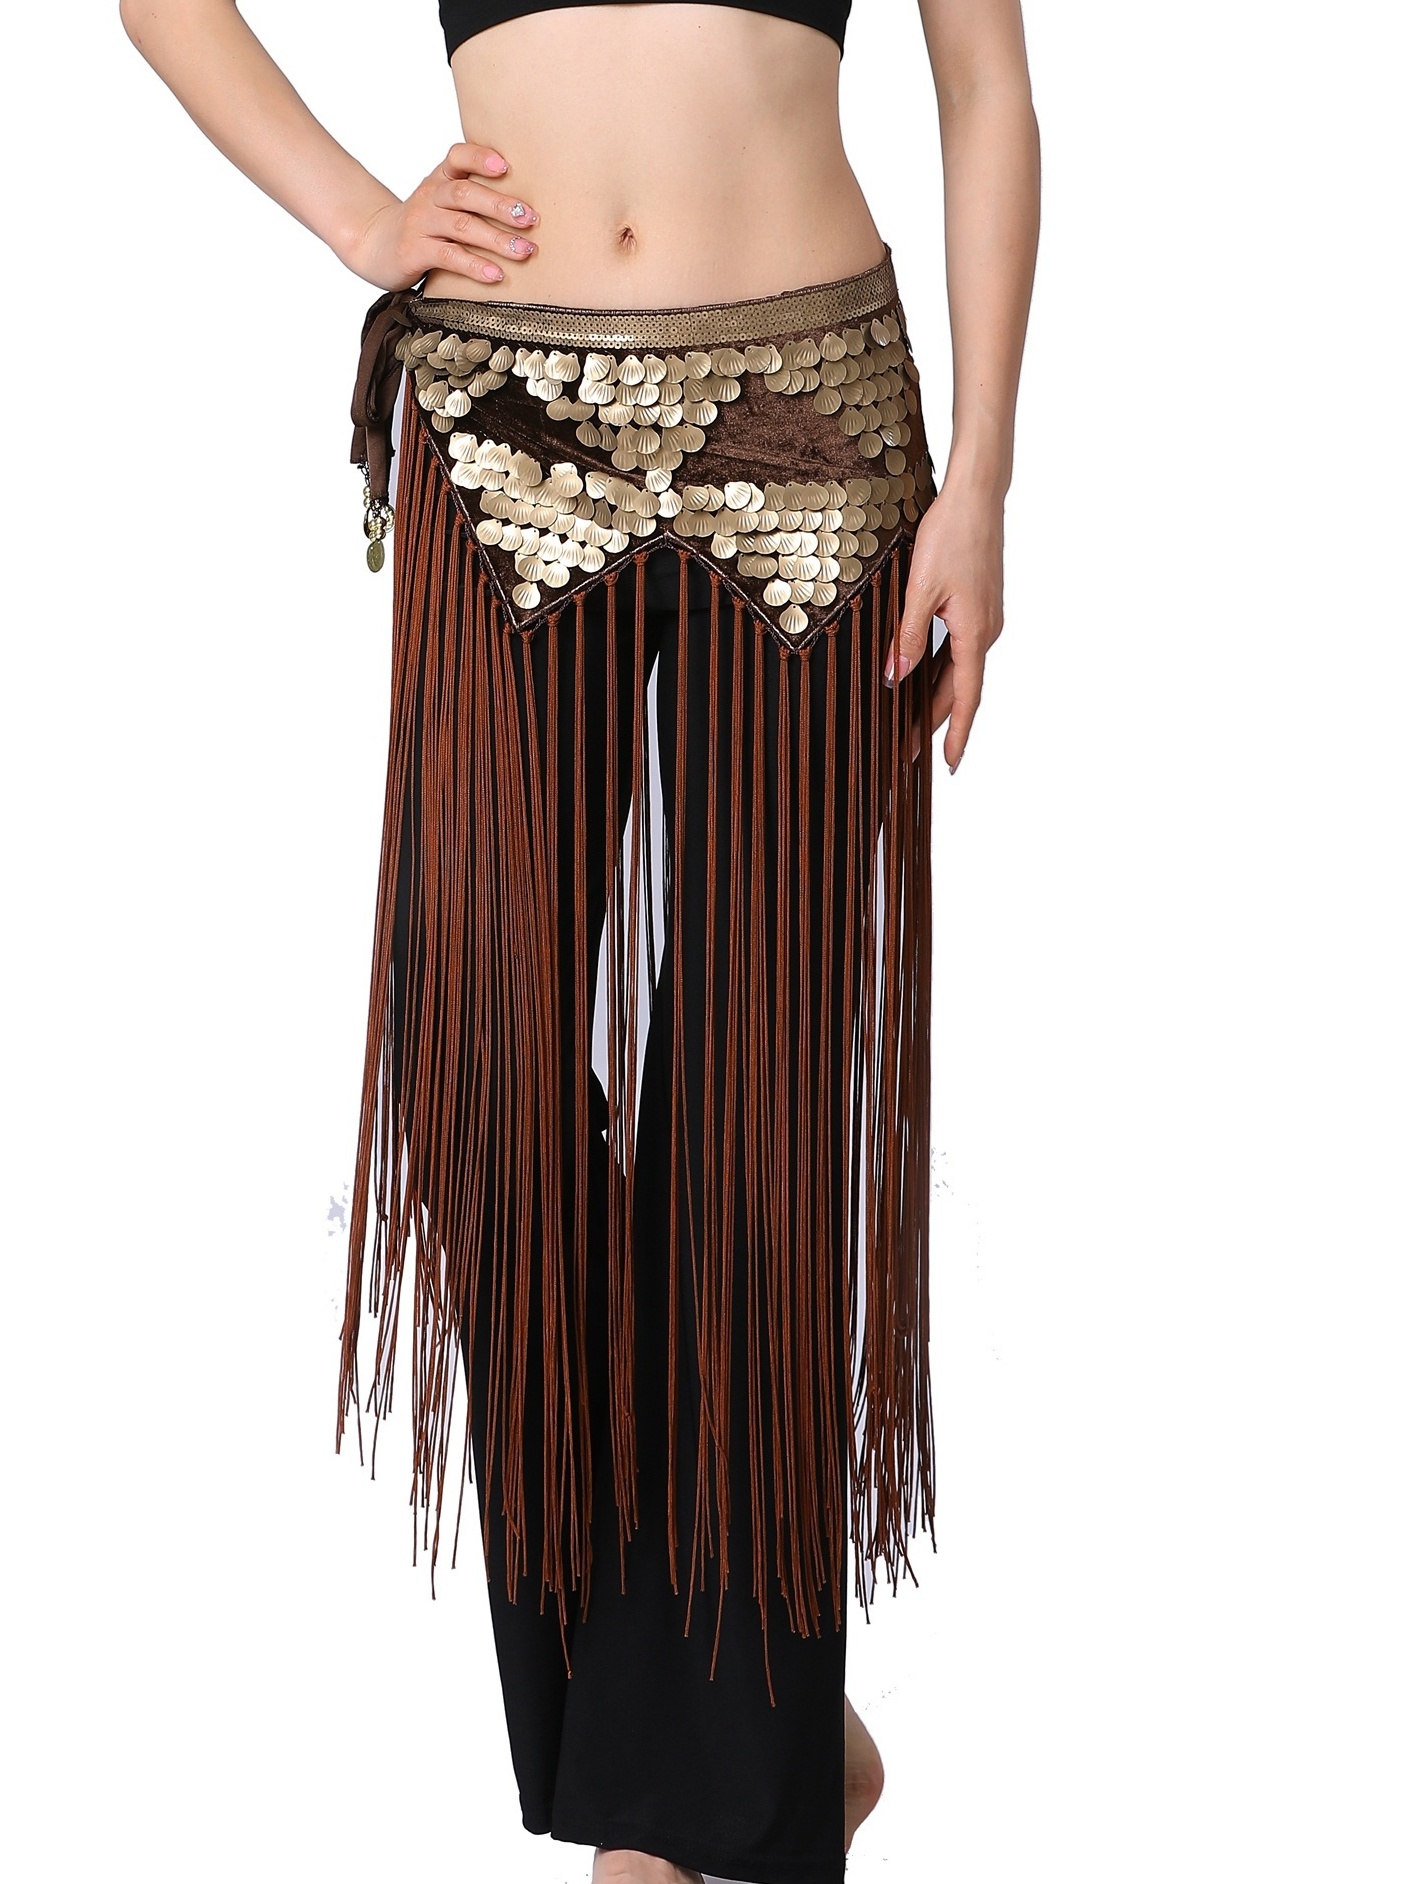 Tribal Vintage Belly Dance Costume Outfit Set 3pcs Bra Sequins